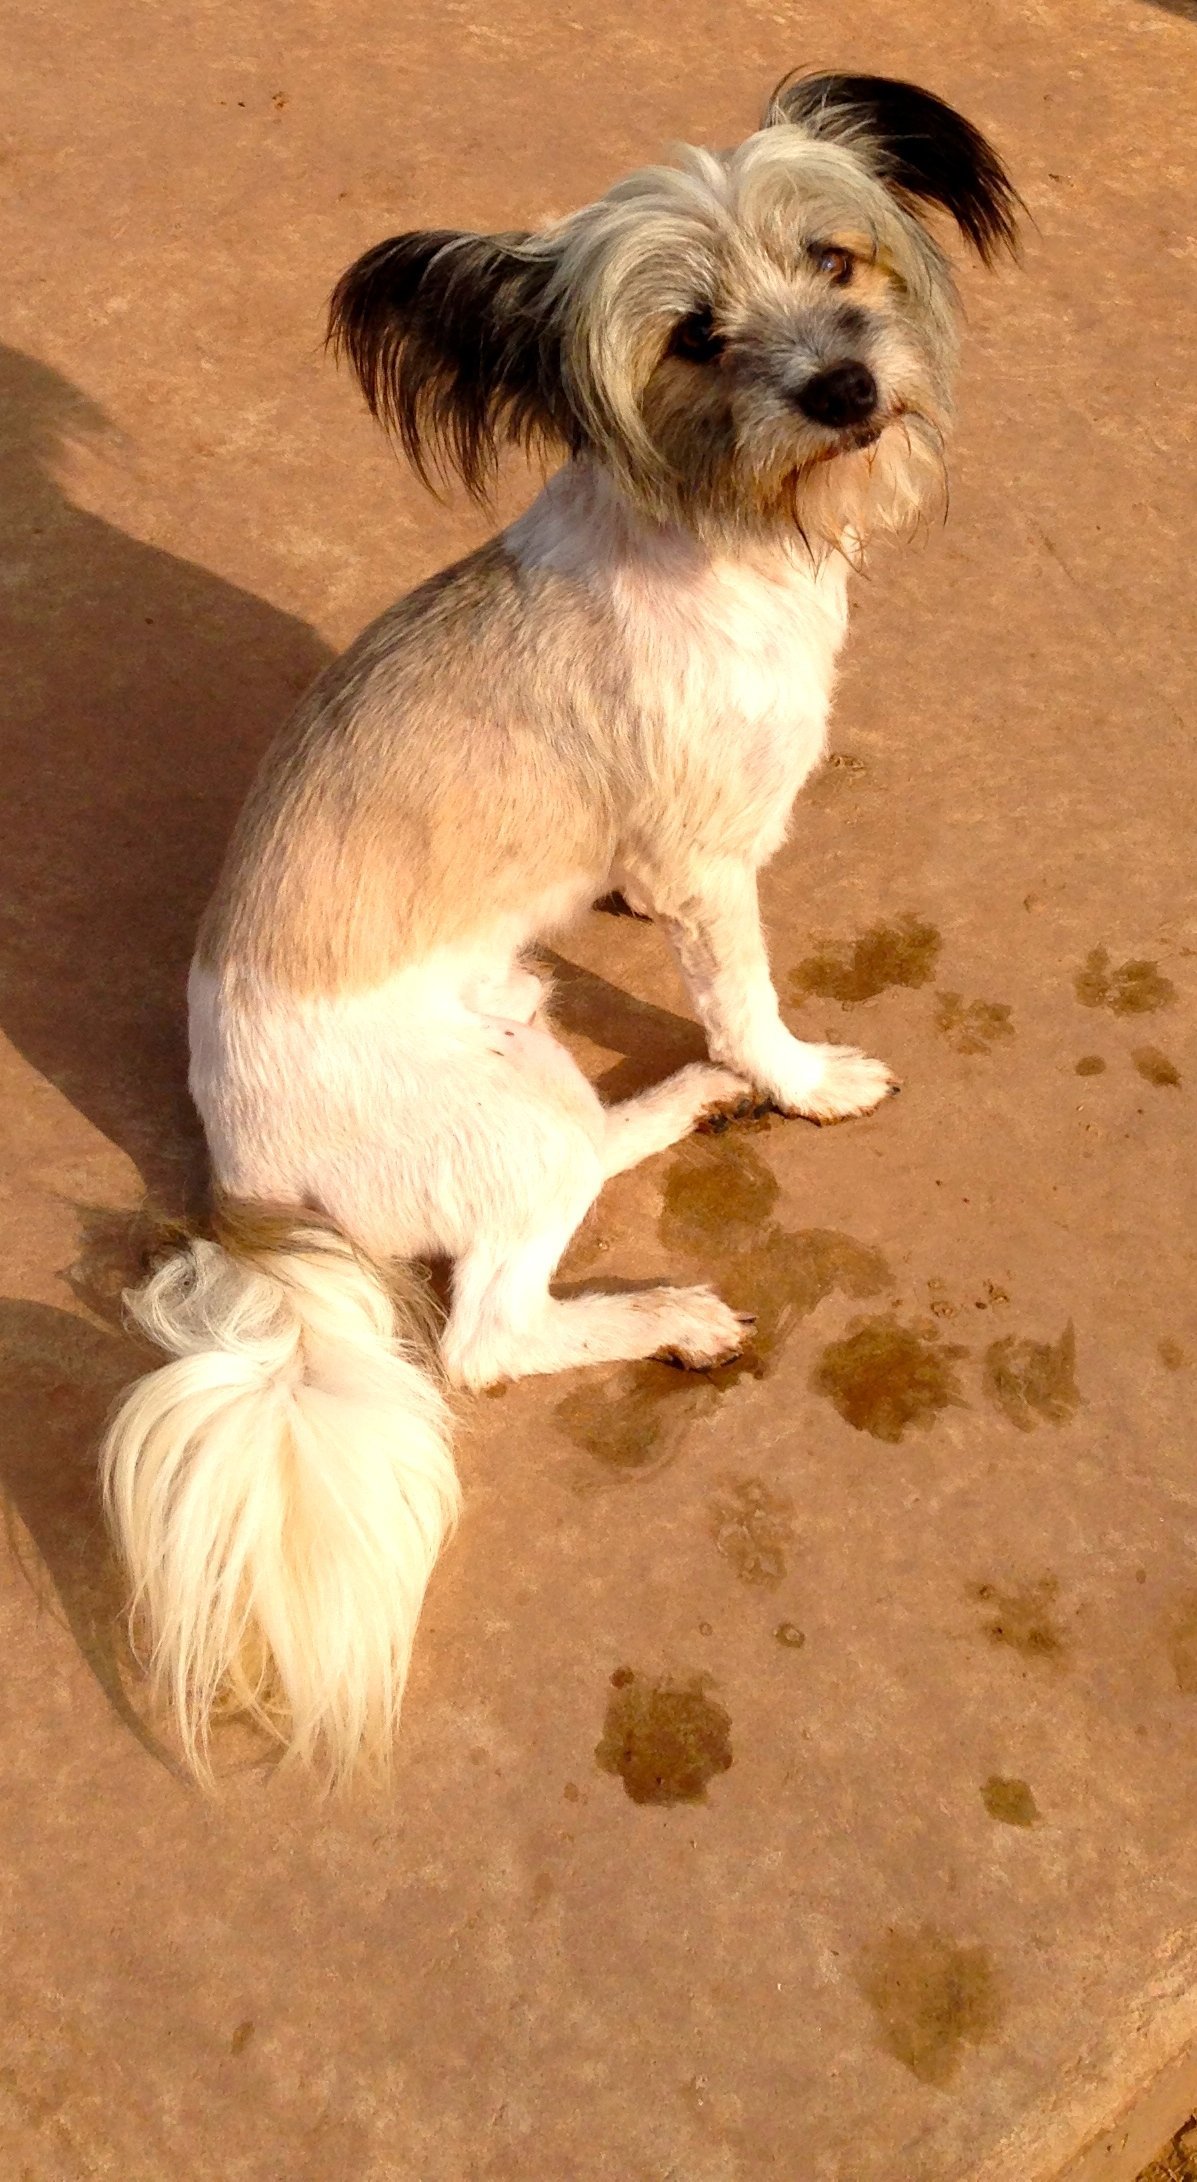 Pedro/Santuary Dog, an adoptable Terrier in Prague, OK, 74864 | Photo Image 2